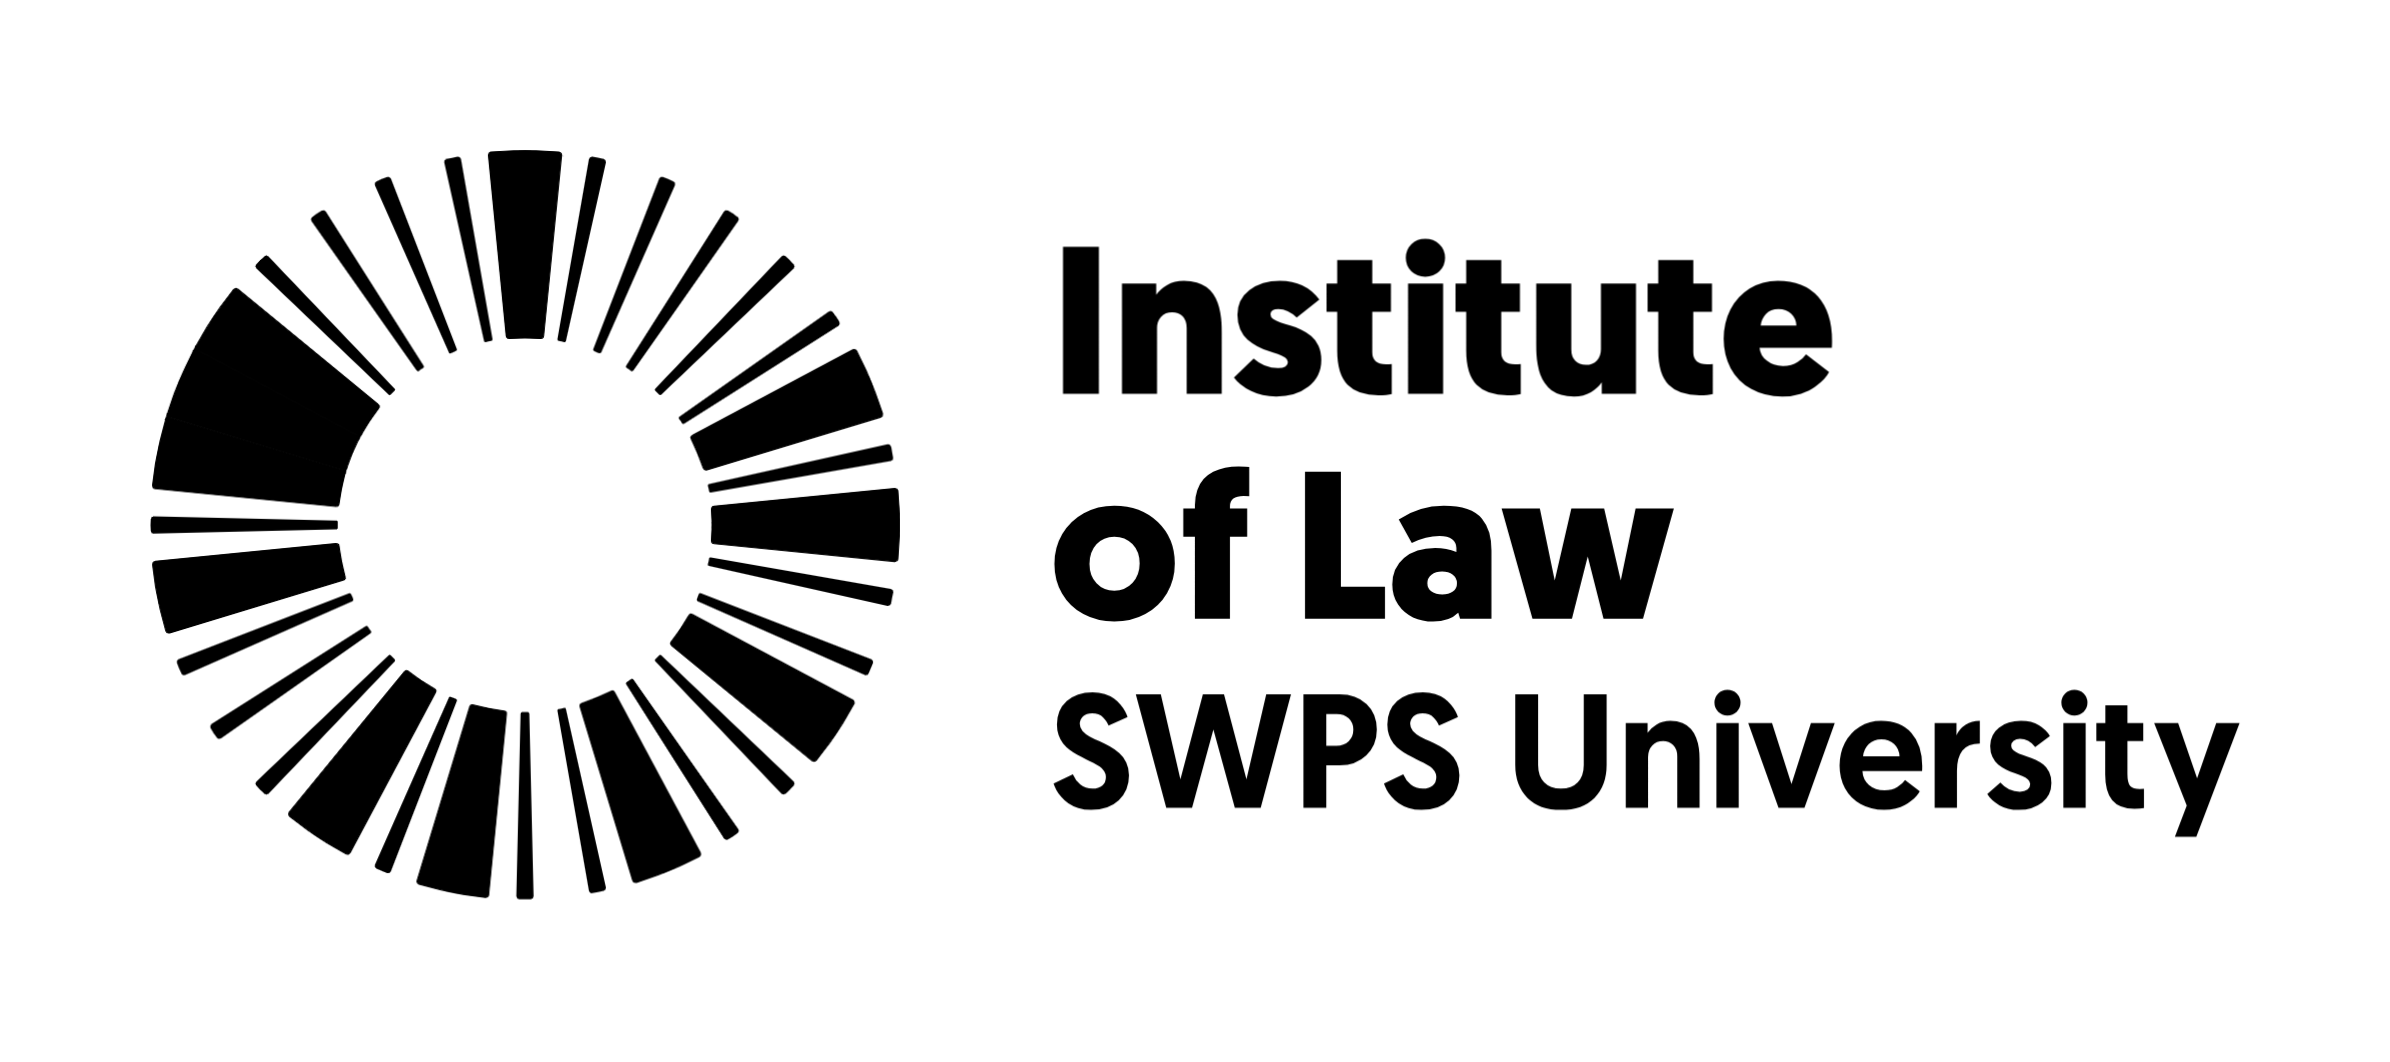 Institute of Law at SWPS University, logo